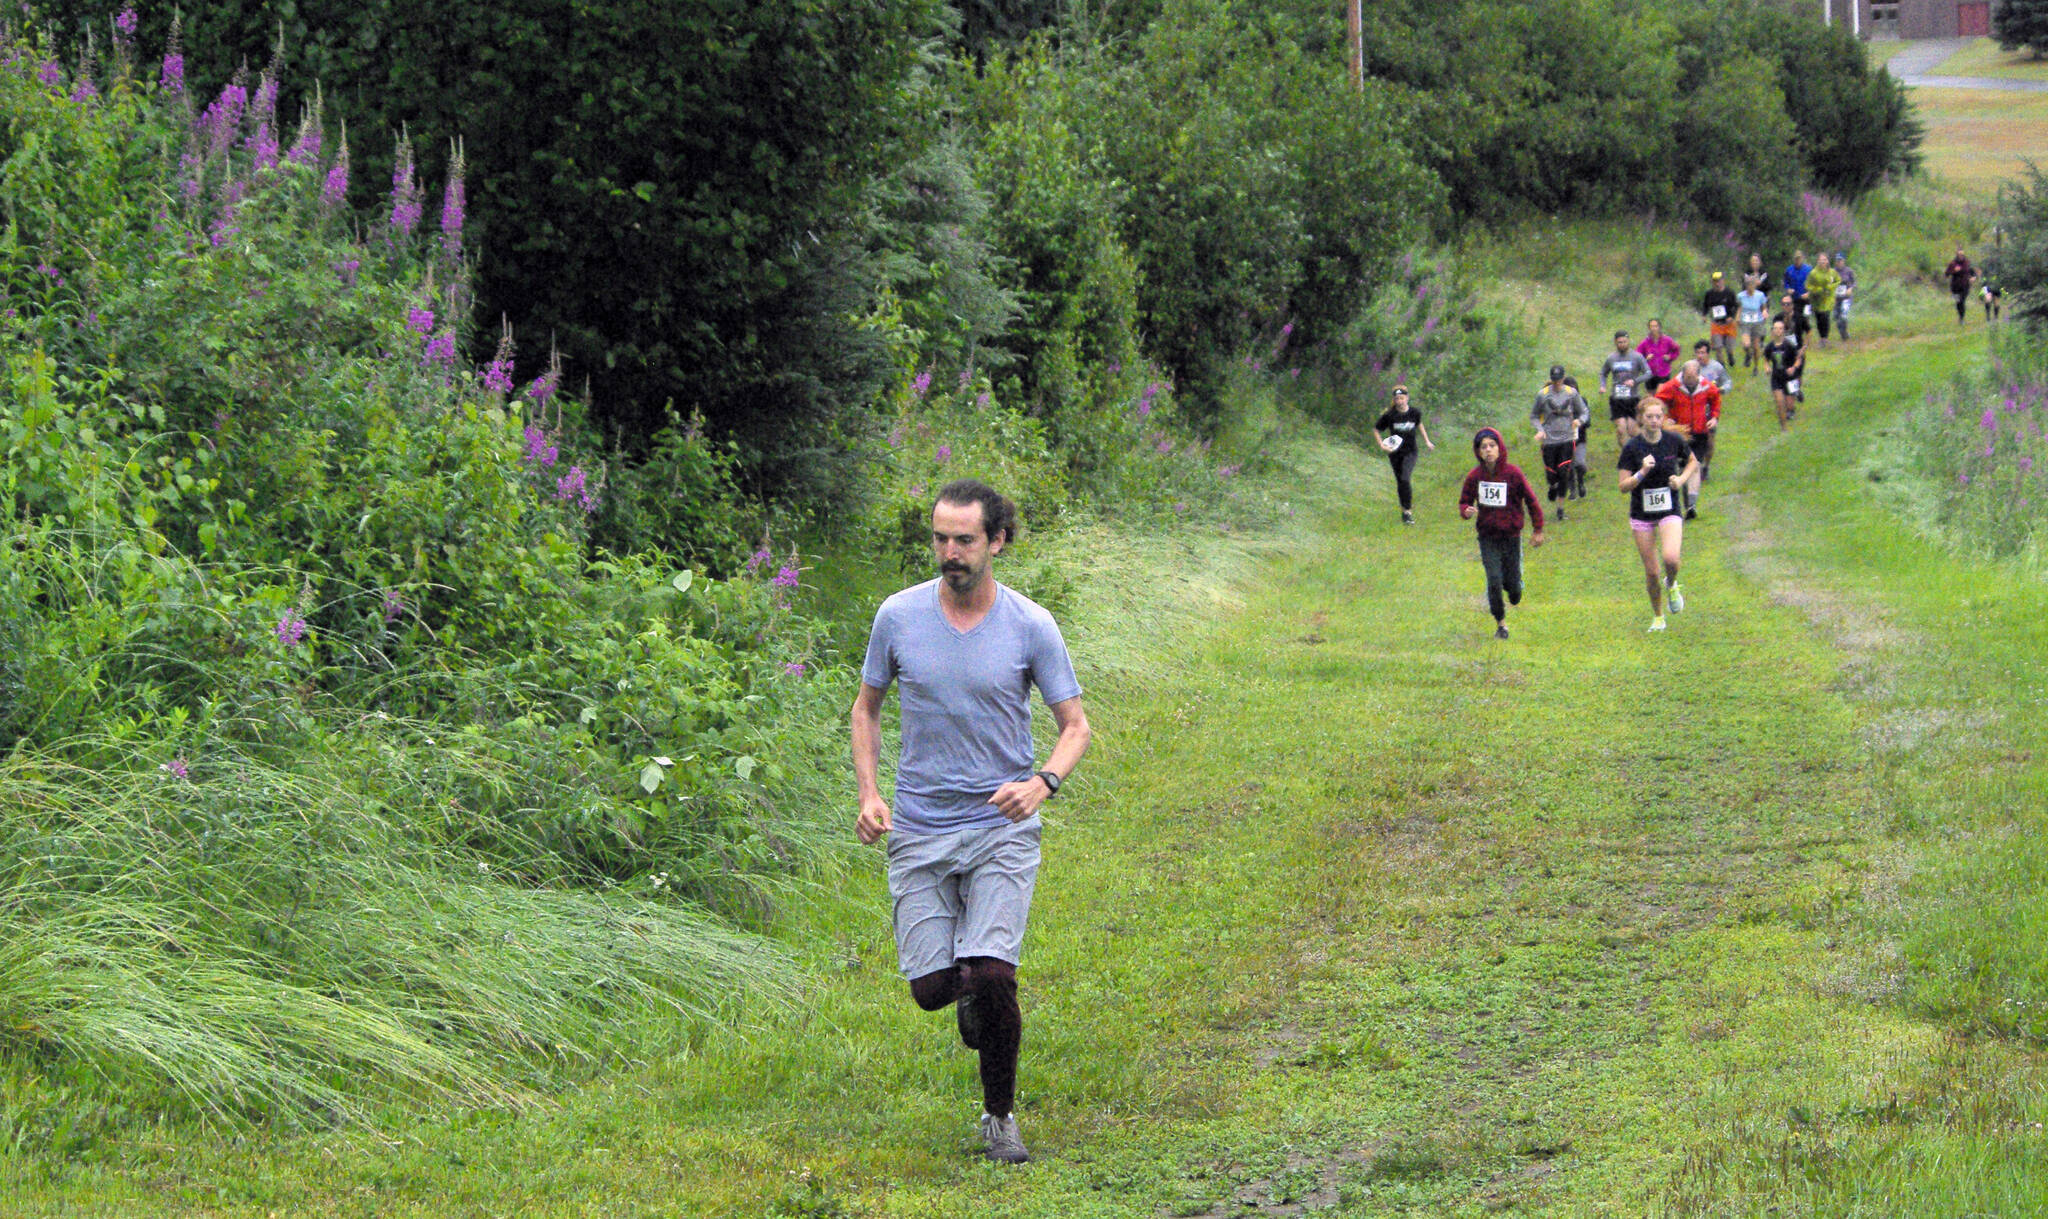 Competitors start the Unity Run on Saturday, July 16, 2022, at Tsalteshi Trails just outside of Soldotna, Alaska. (Photo by Jeff Helminak/Peninsula Clarion)